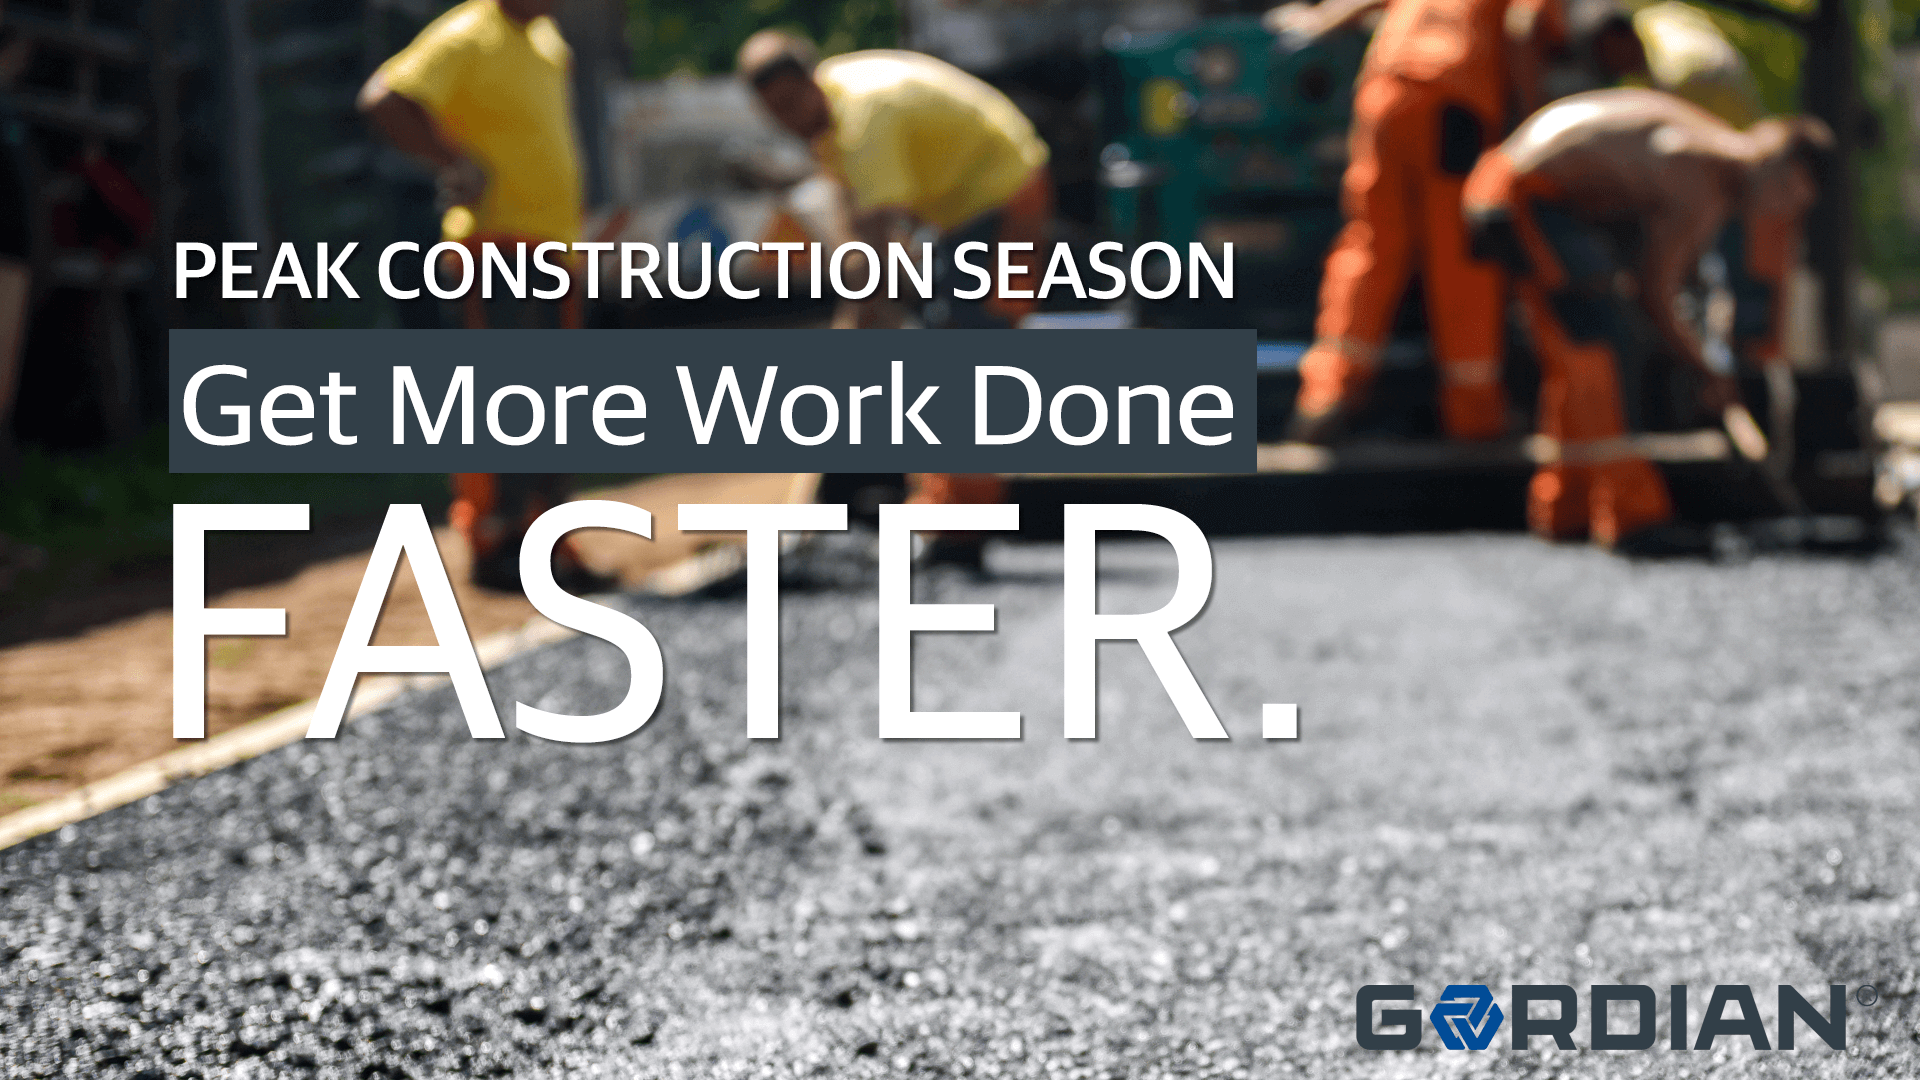 Peak Construction Season: Get More Work Done, Faster 2